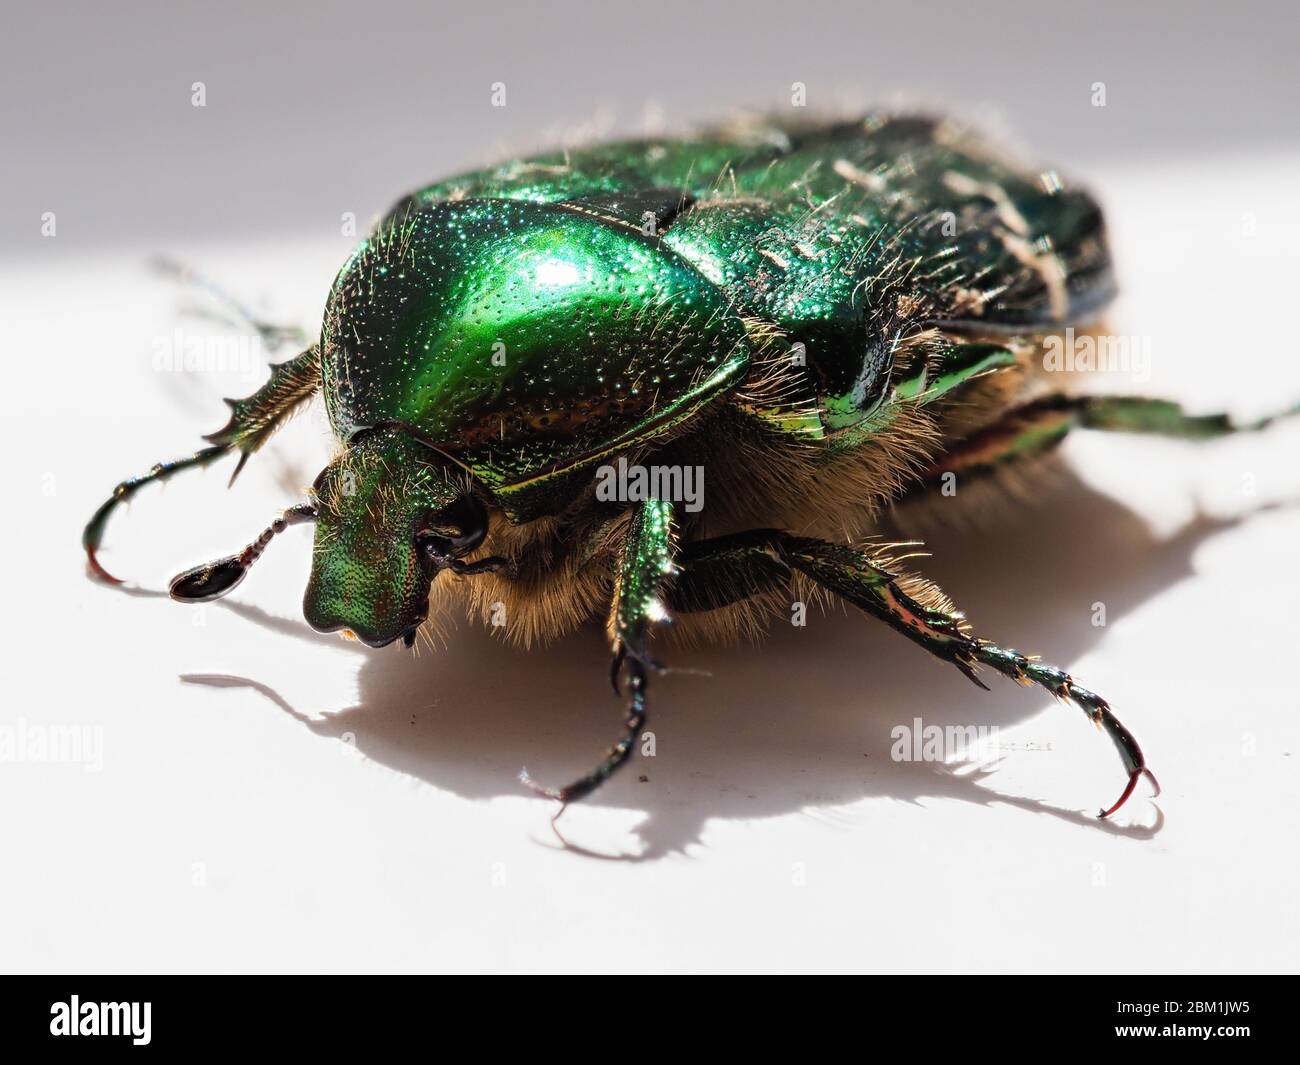 Rose chafer beetle Cetonia aurata with metallic green exoskeleton on a white surface UK Stock Photo